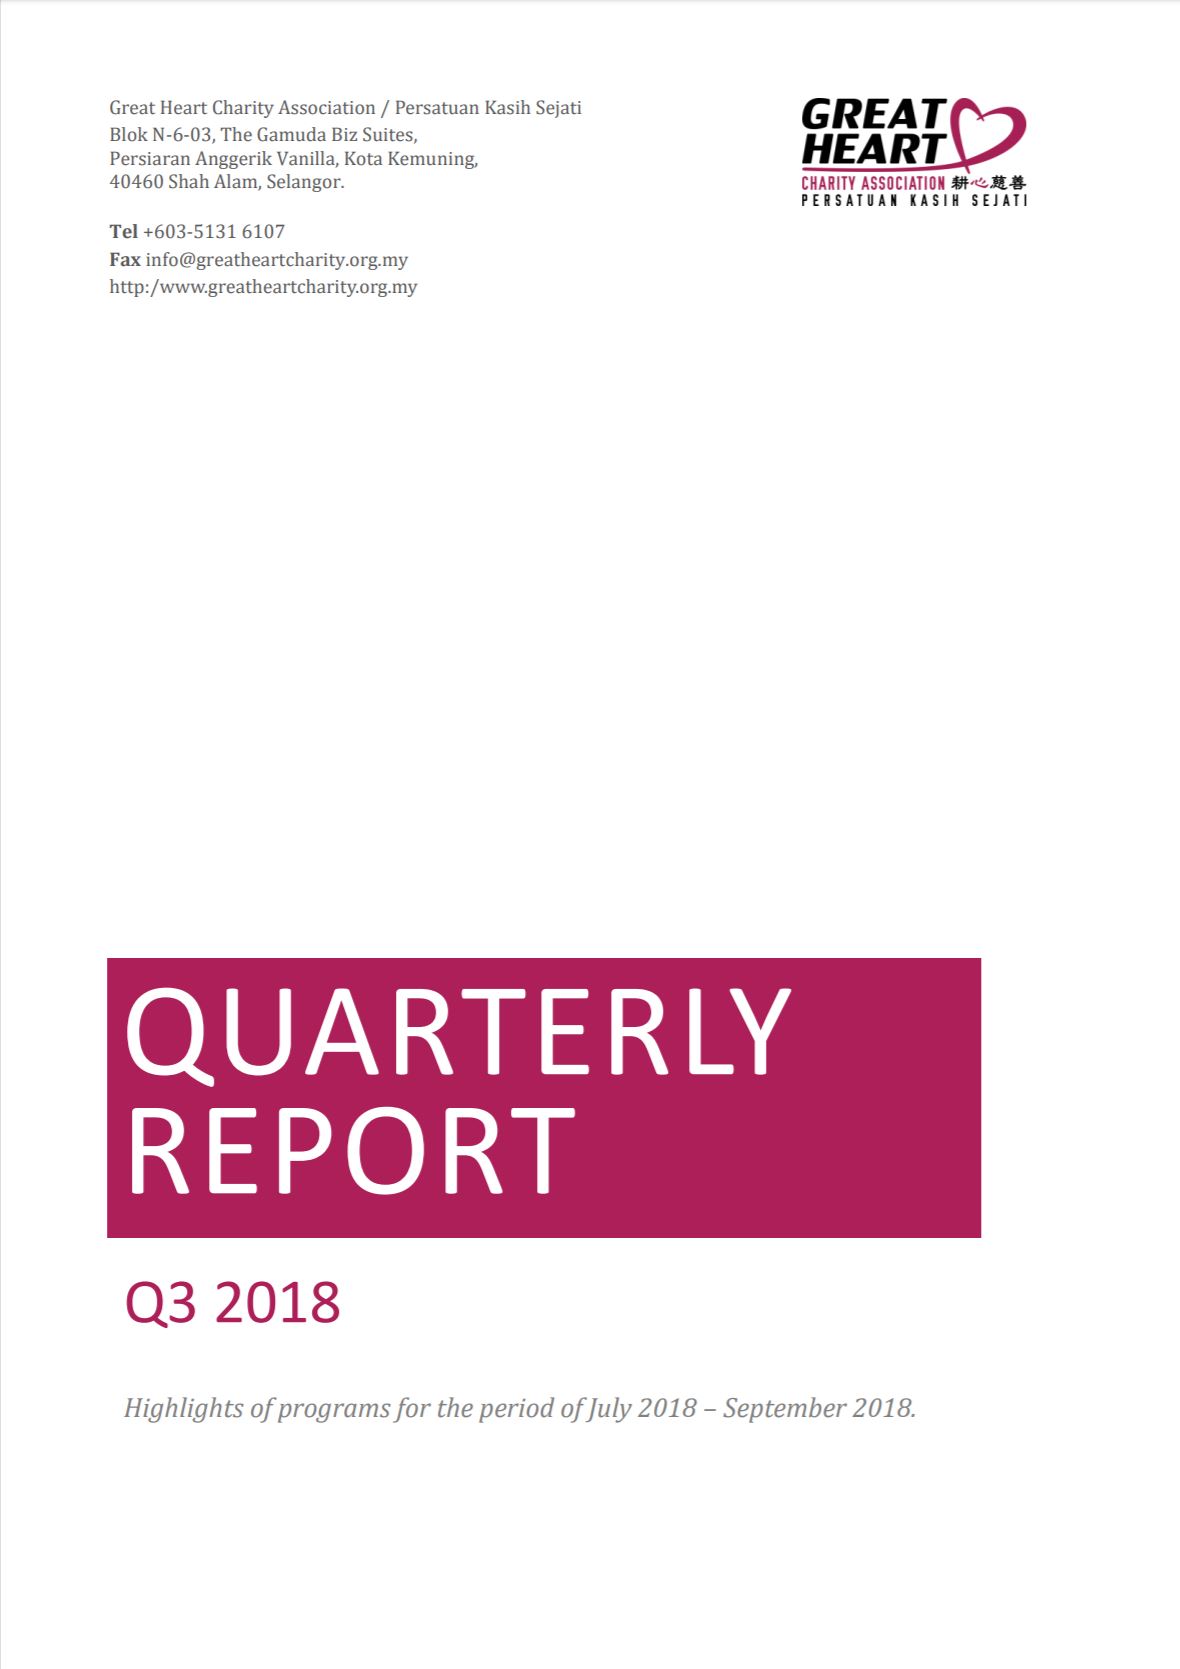 Great Heart Quarterly Report - Quarter 3 - 2018